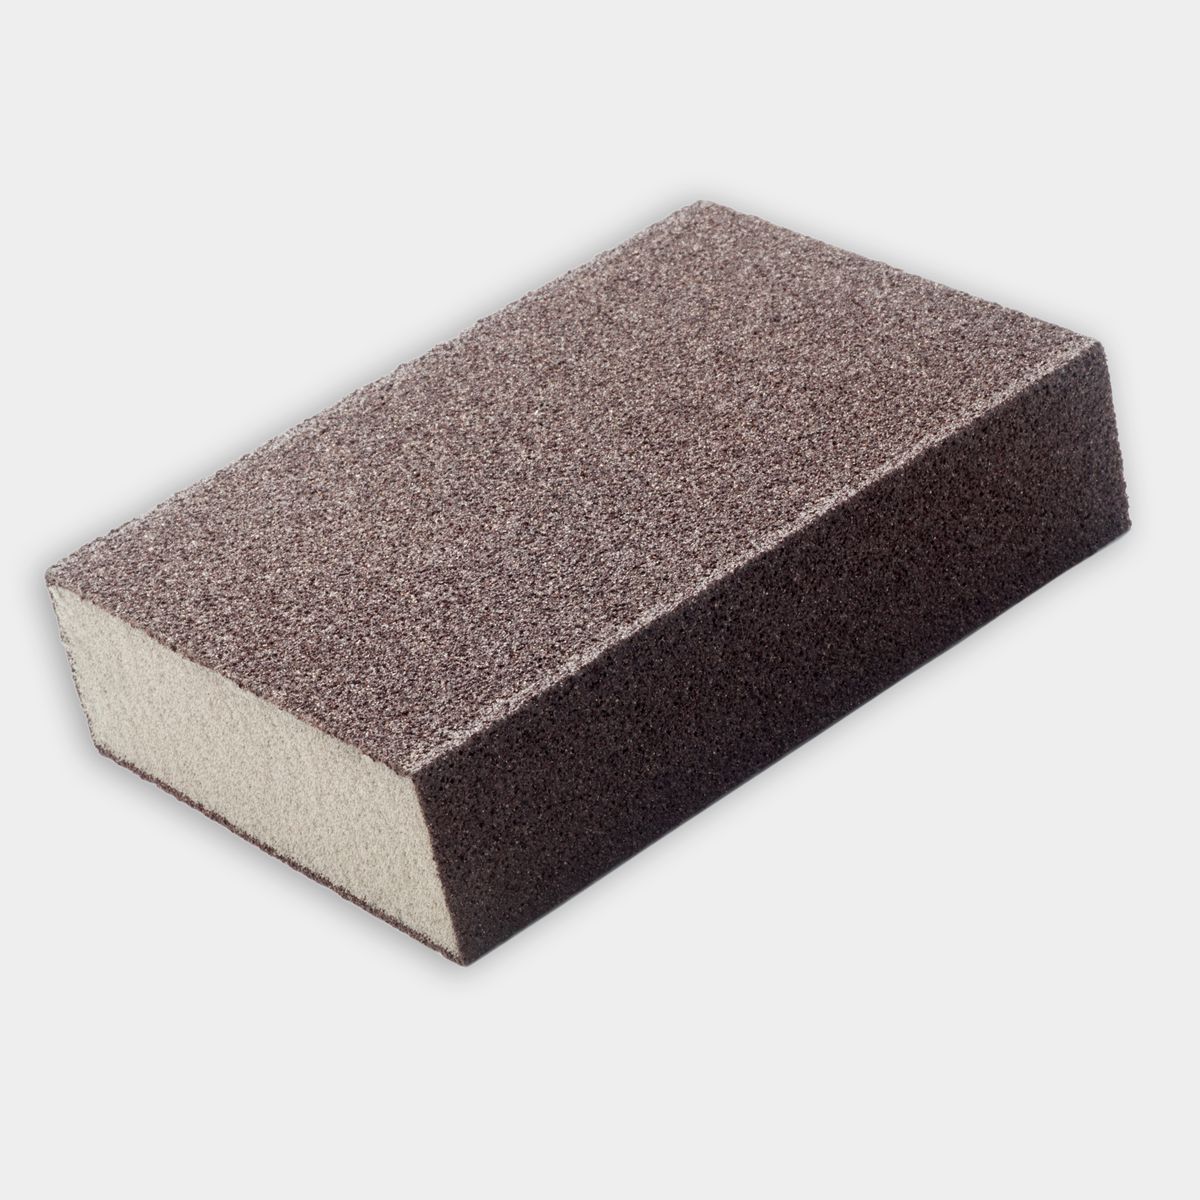 sanding block on grey background